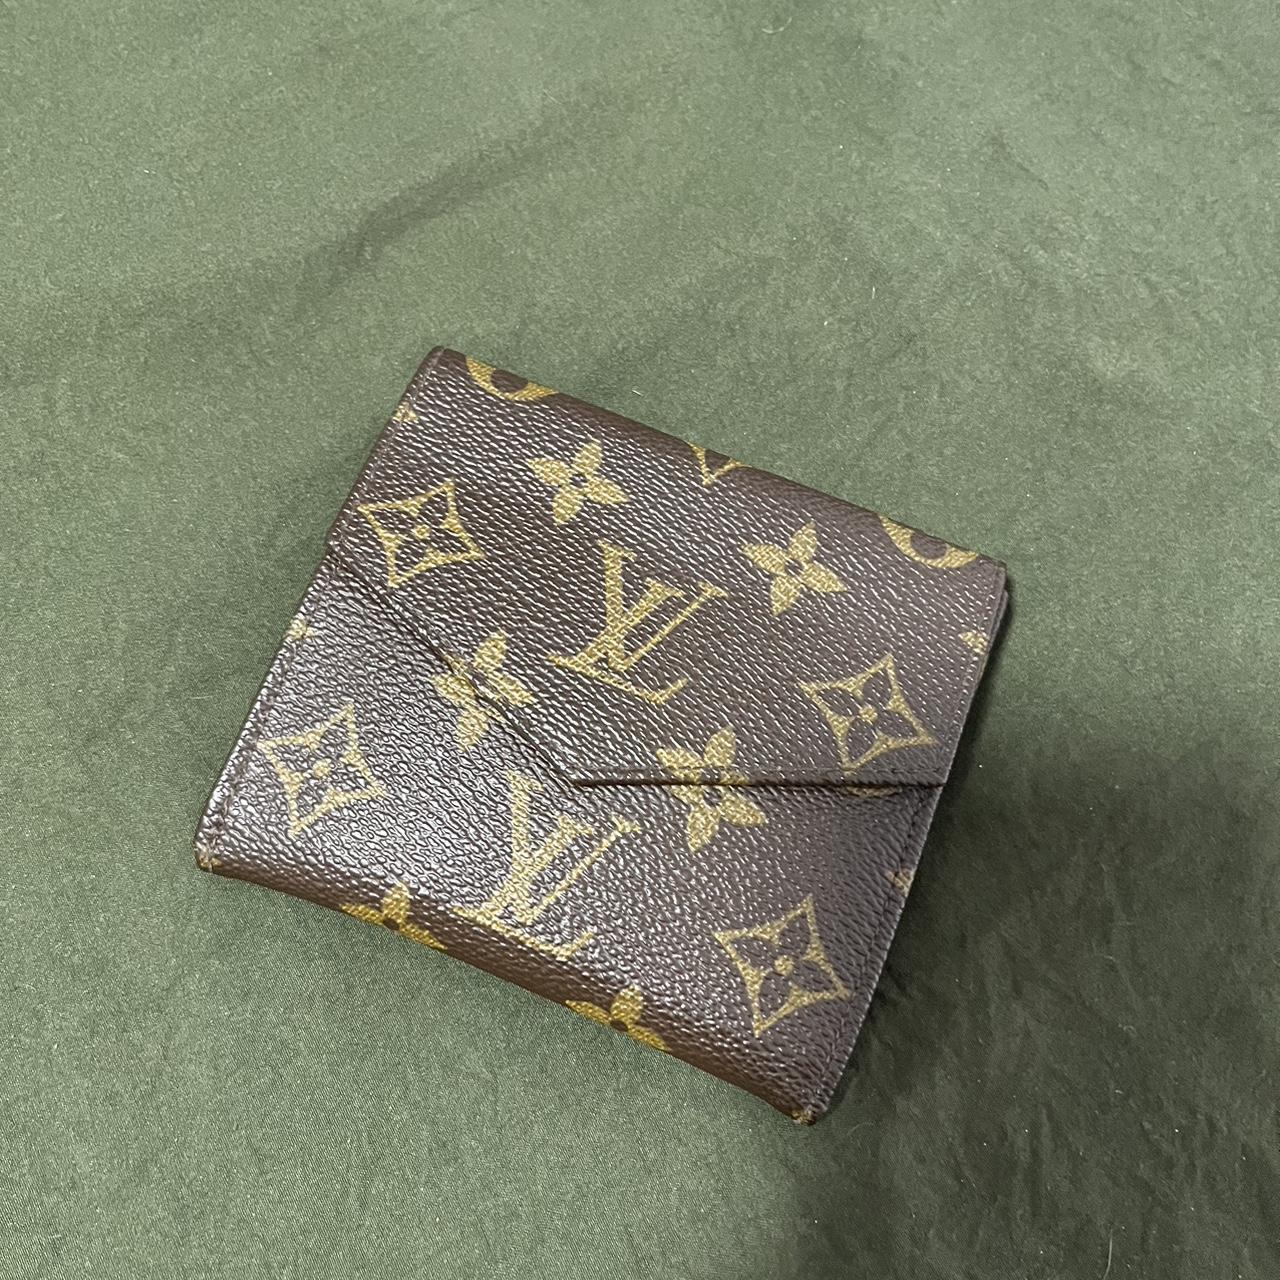 Vintage Louis Vuitton Card Holder Monogram - Depop